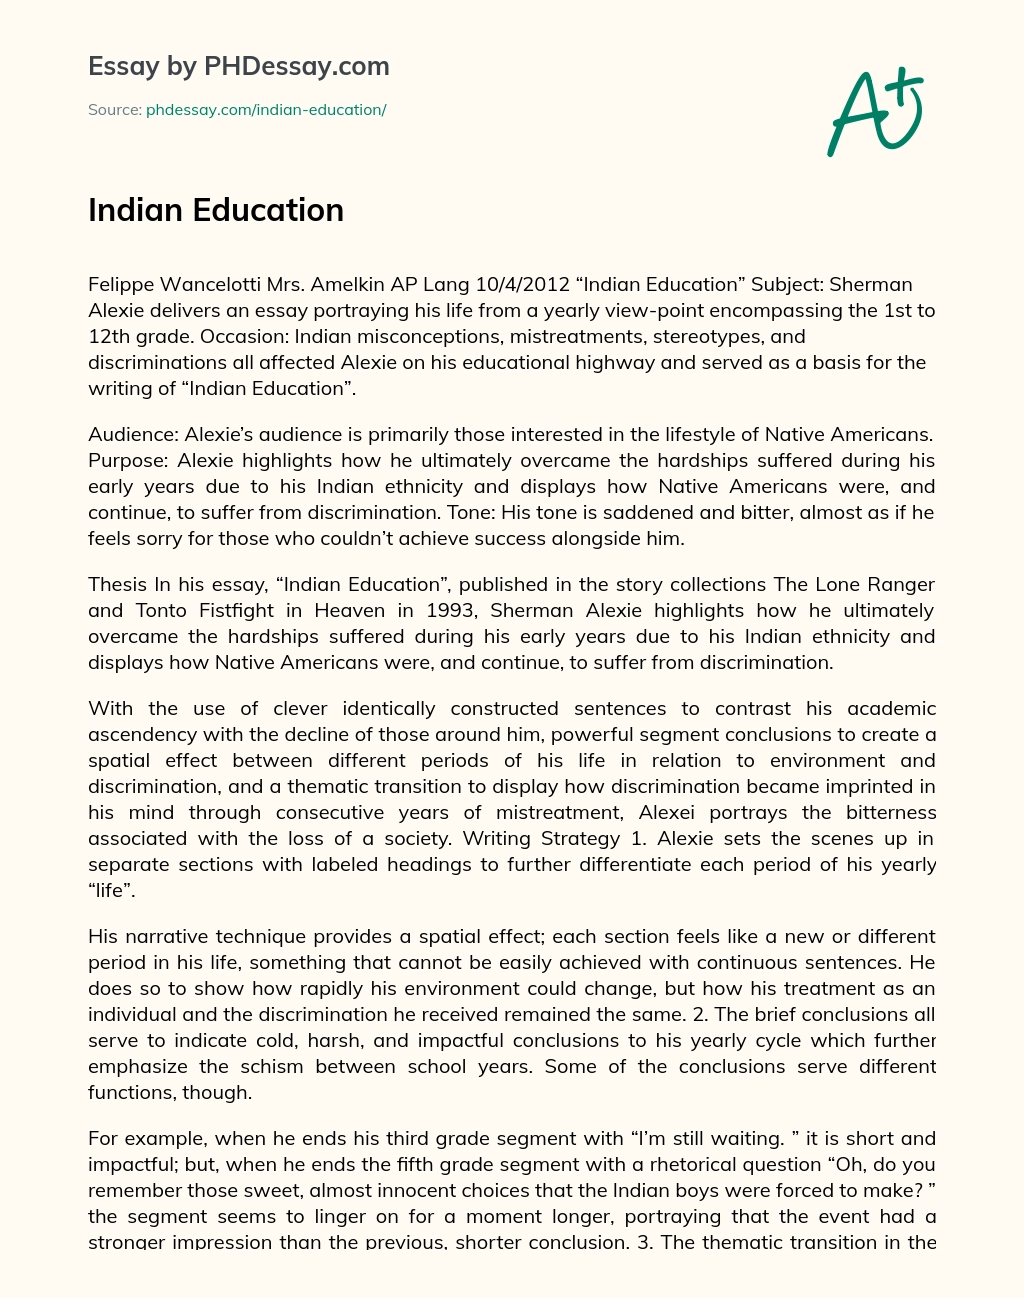 Indian Education essay